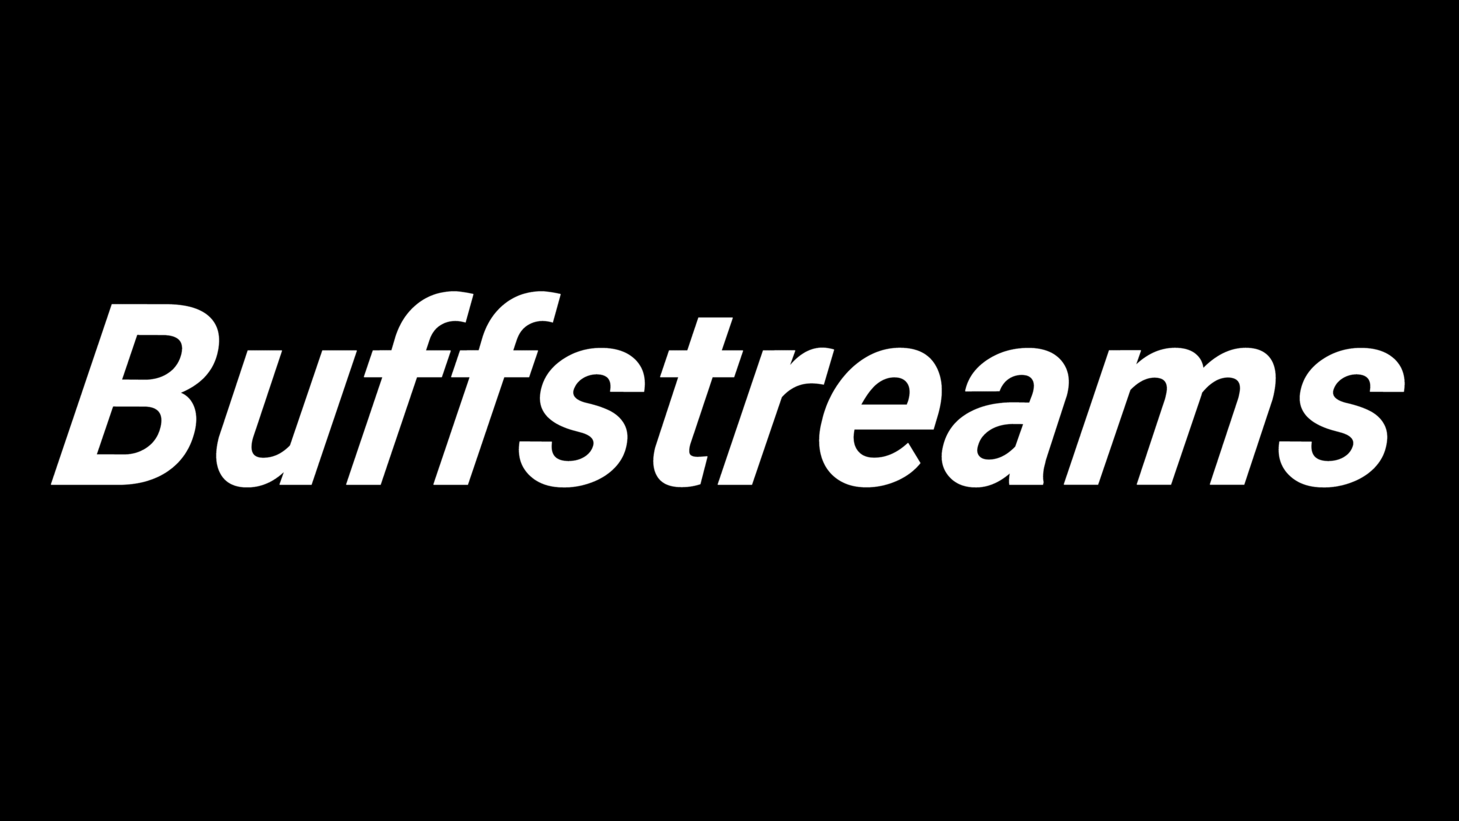 Buffstreamz symbol